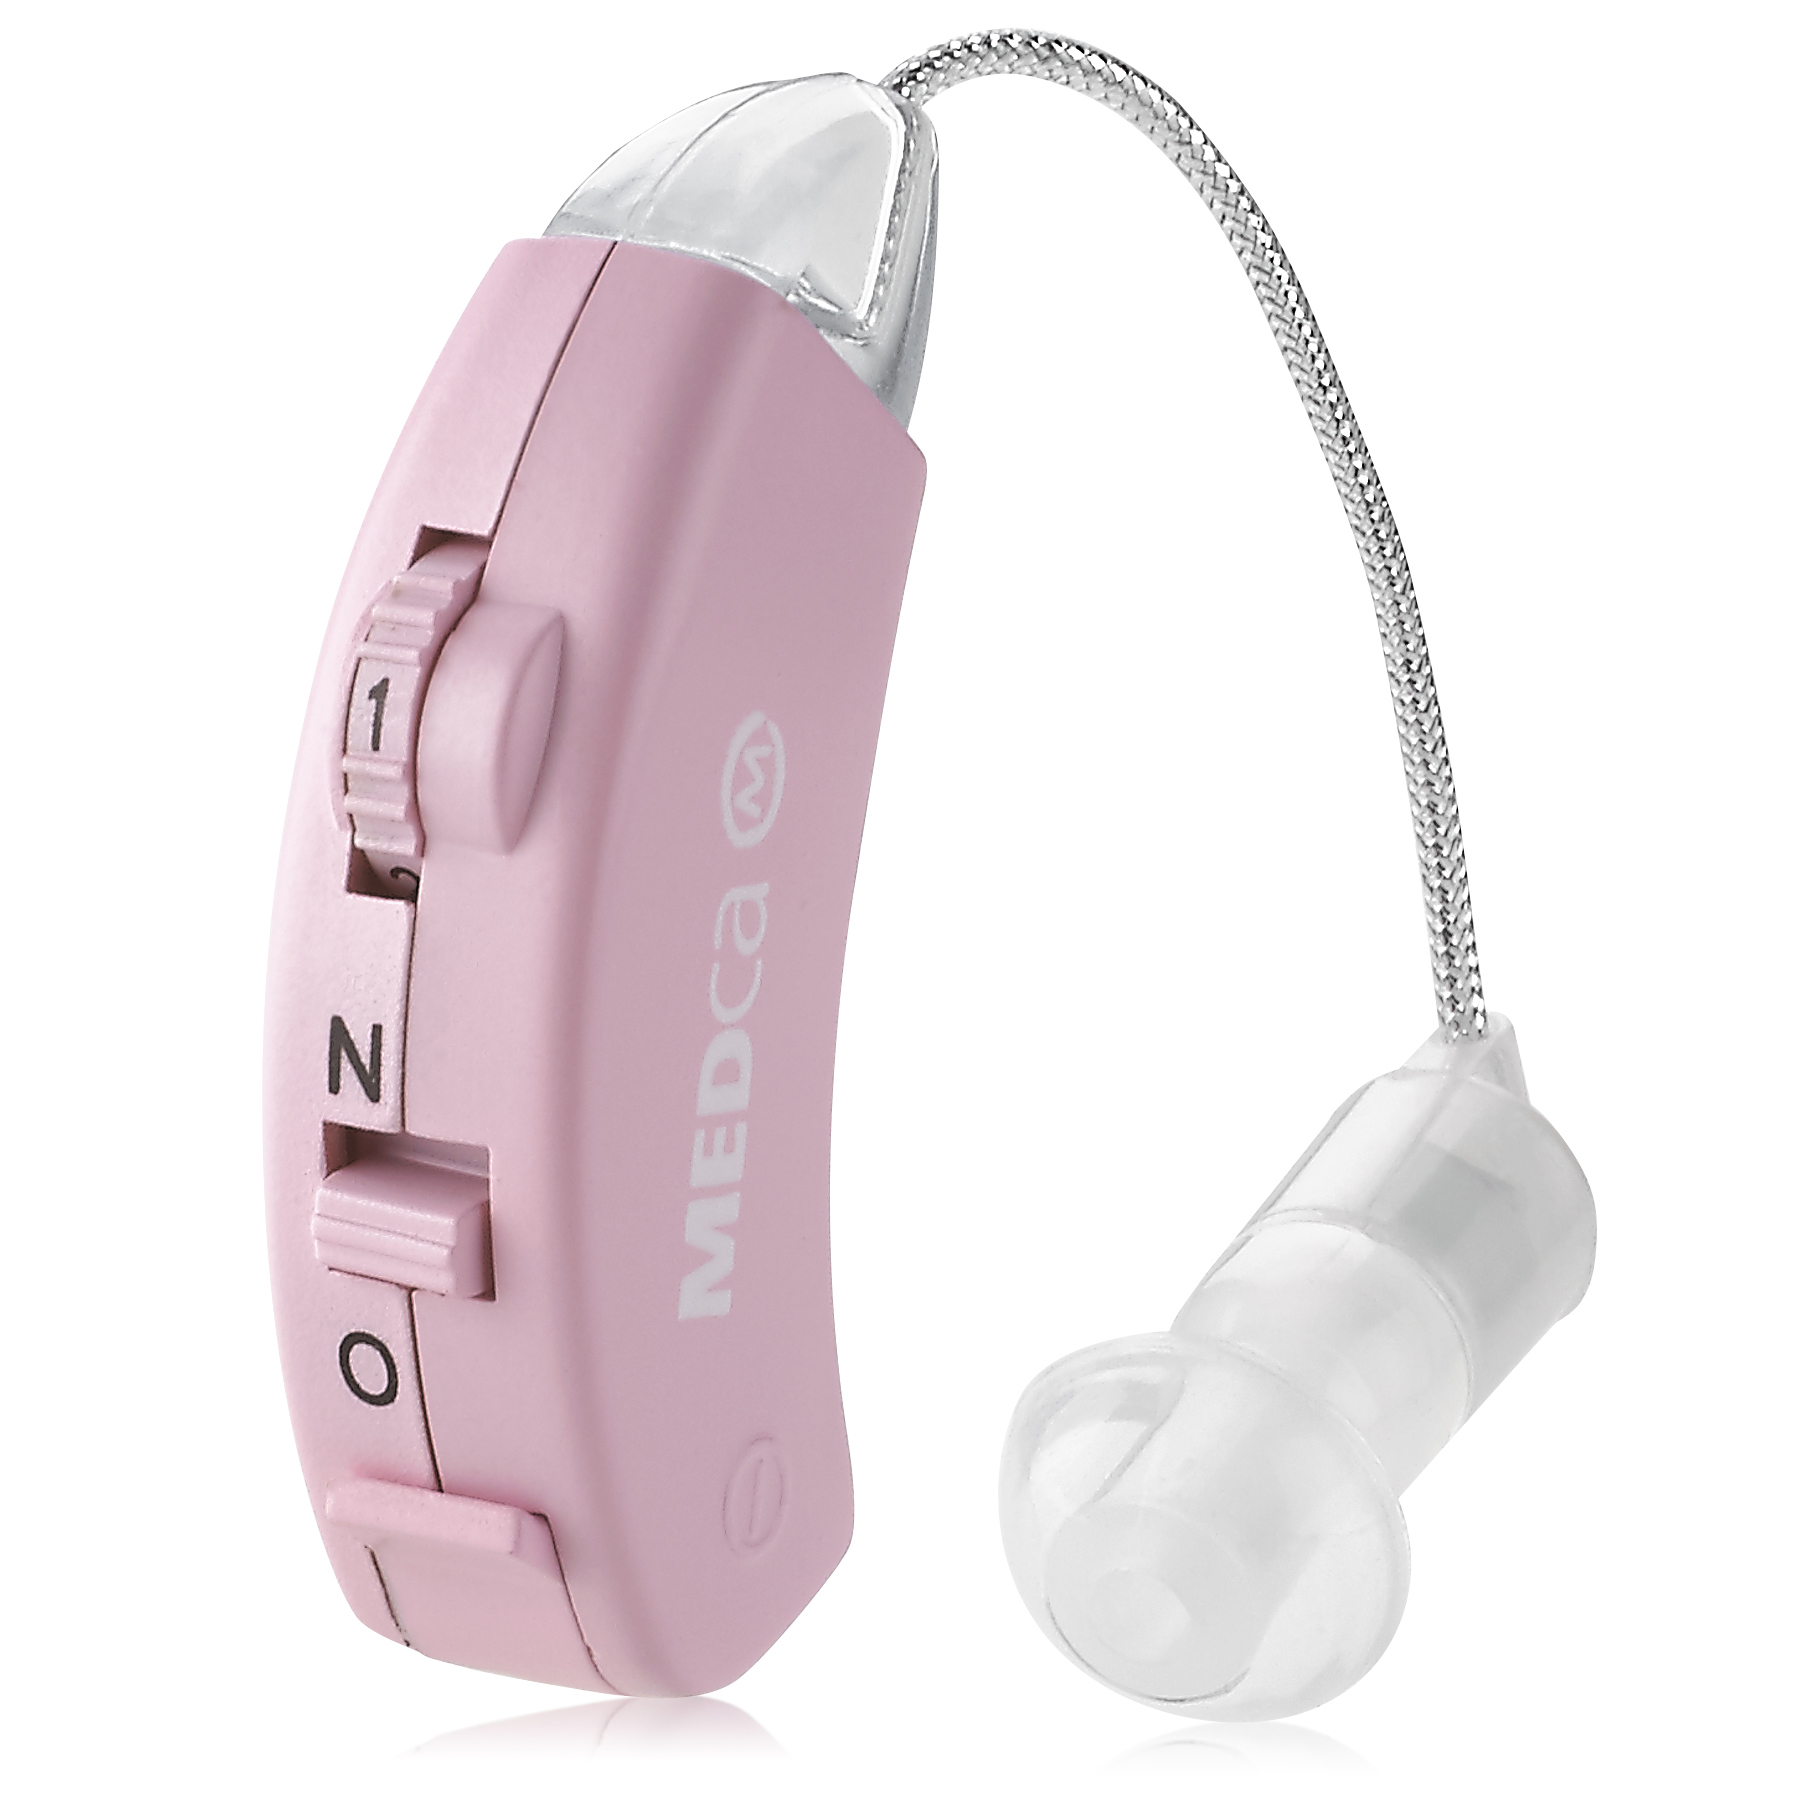 Digital Hearing Aids - BTE Hearing Ear Amplification Device